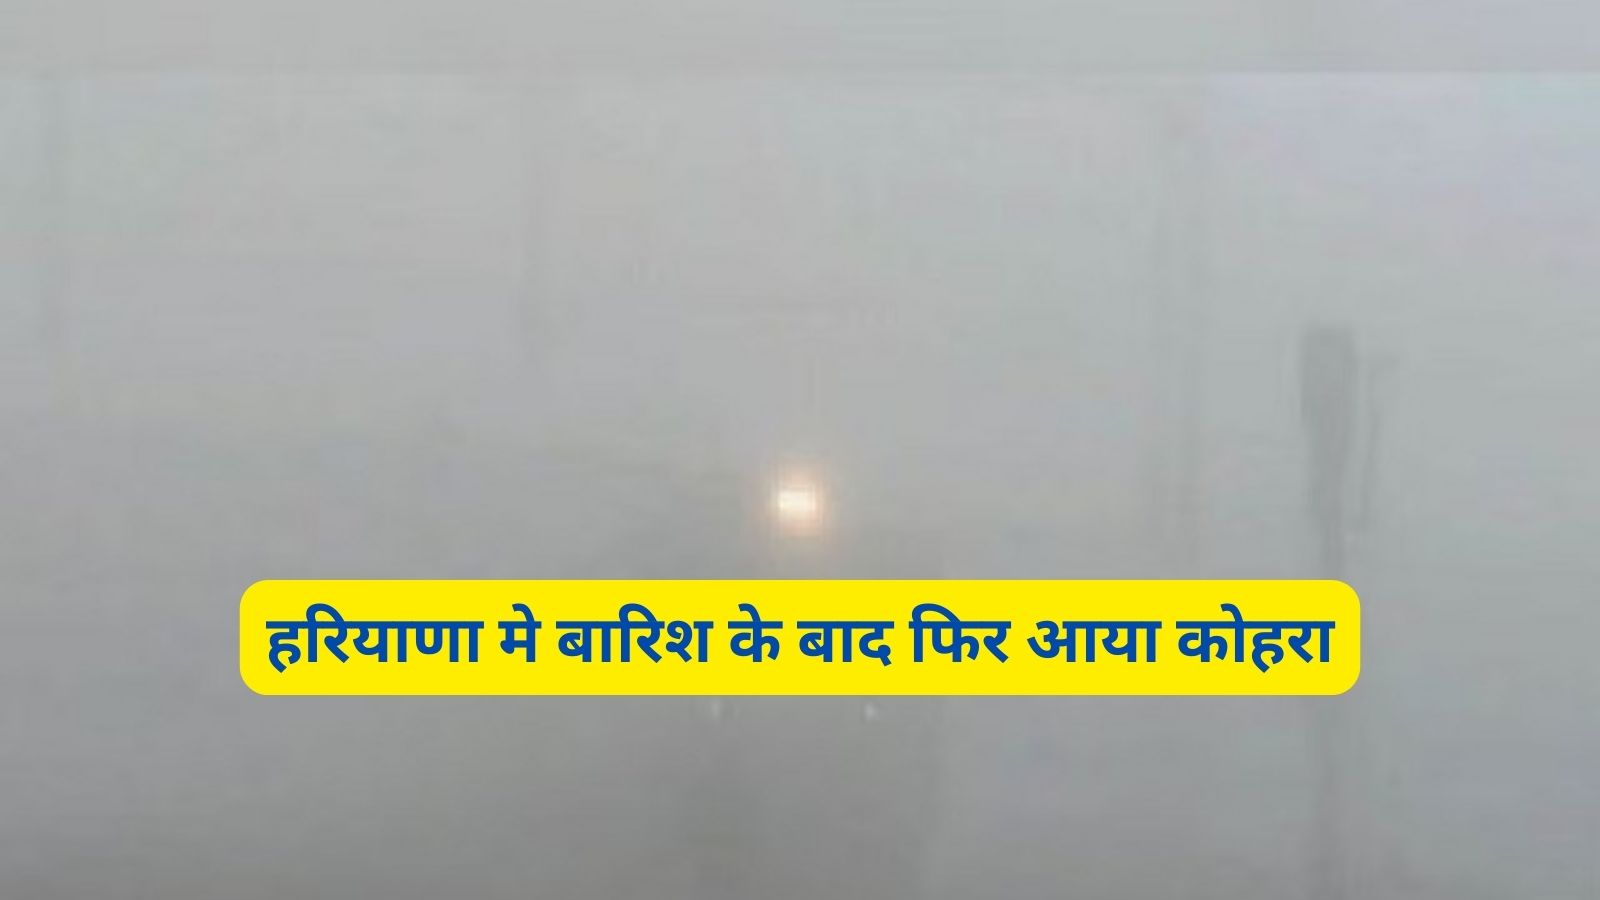 Haryana Weather Report